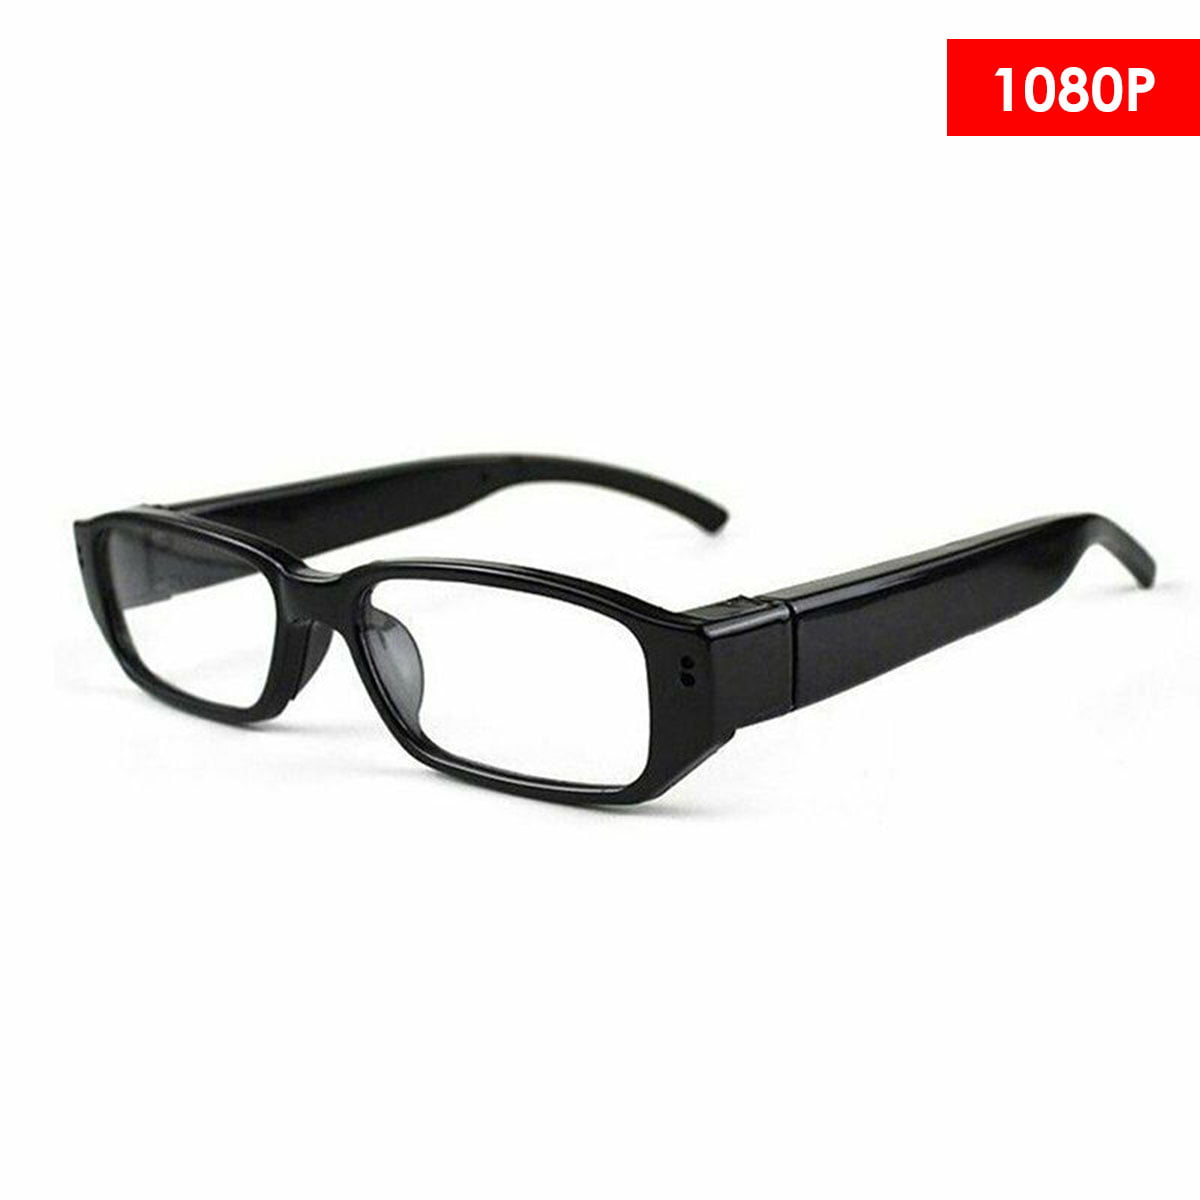 V13 Mini Glasses HD 1080P Spy Camera Hidden Eyewear Cam DVR Video Recorder DV 